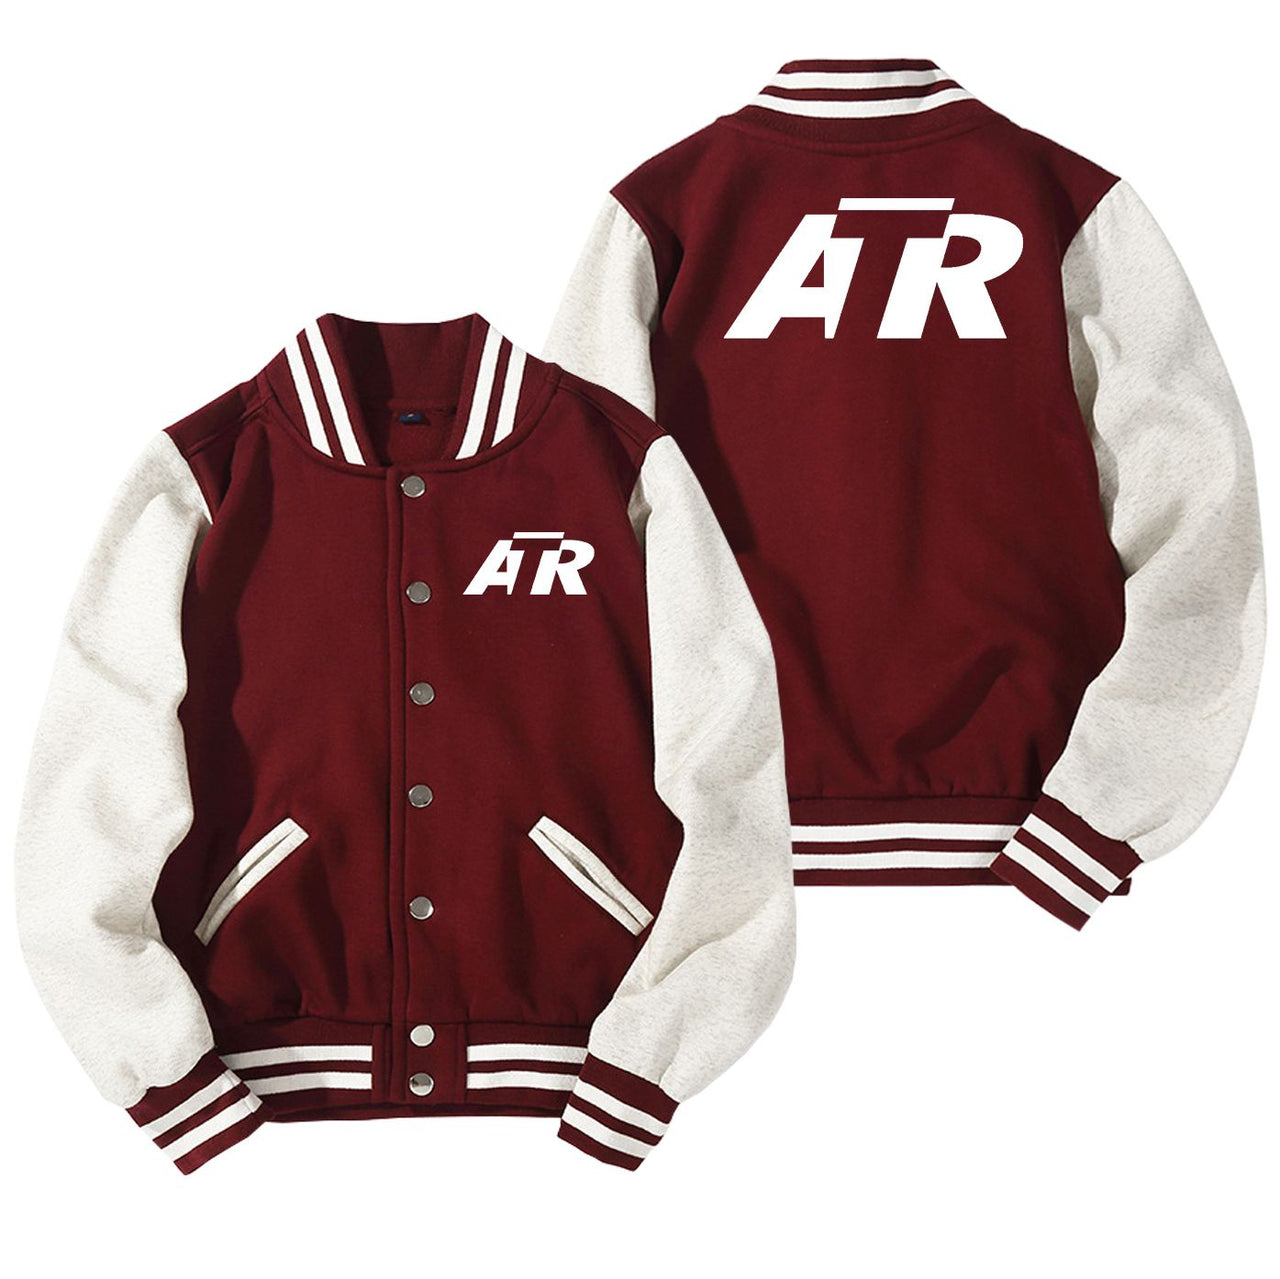 ATR & Text Designed Baseball Style Jackets